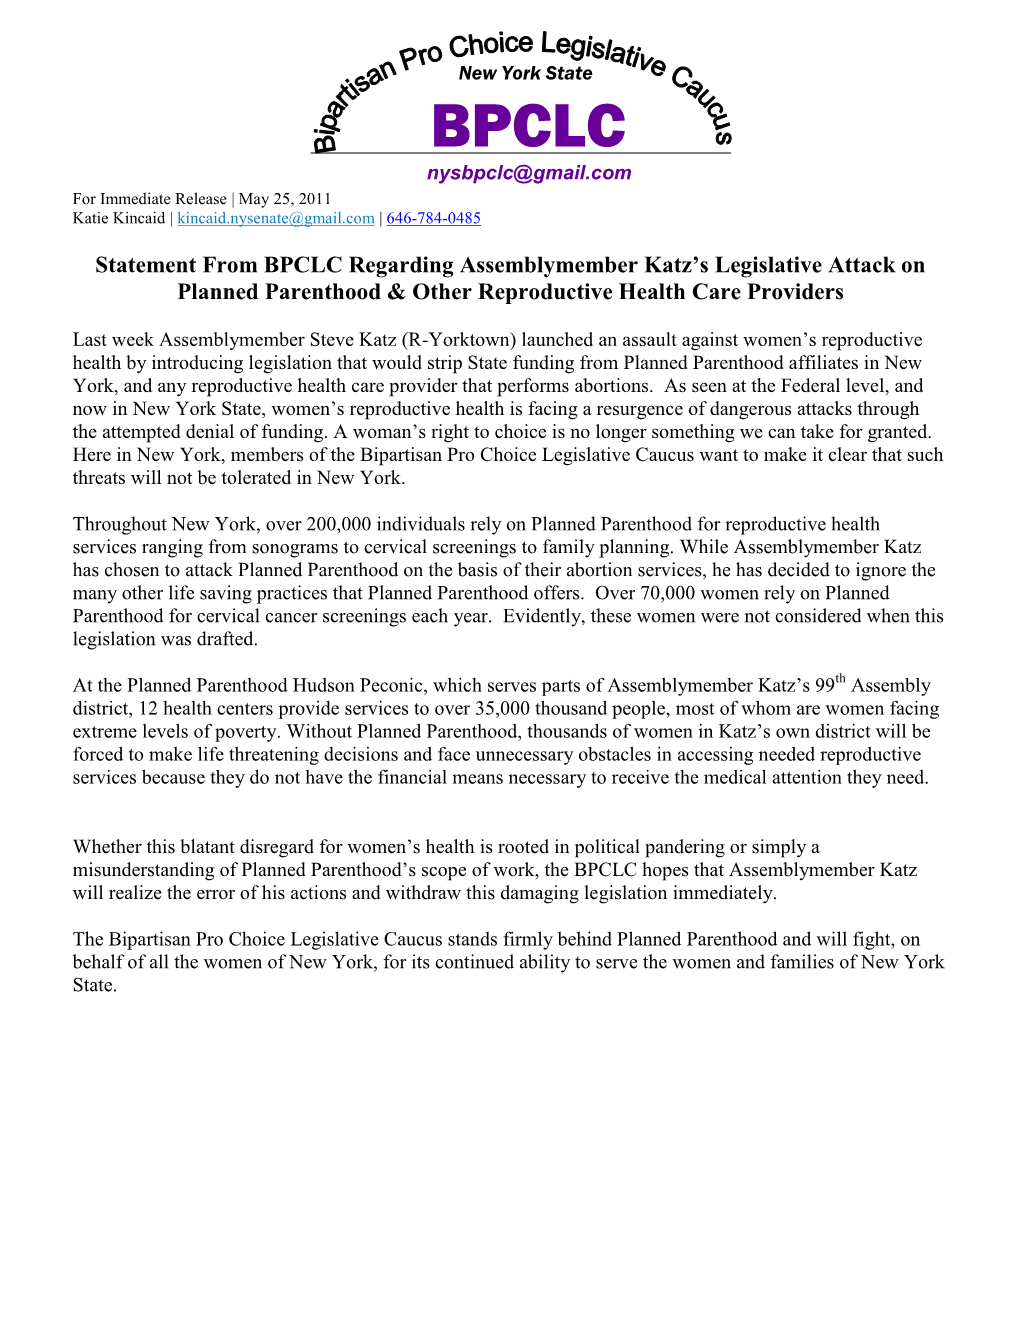 Statement from BPCLC Regarding Assemblymember Katz's Legislative